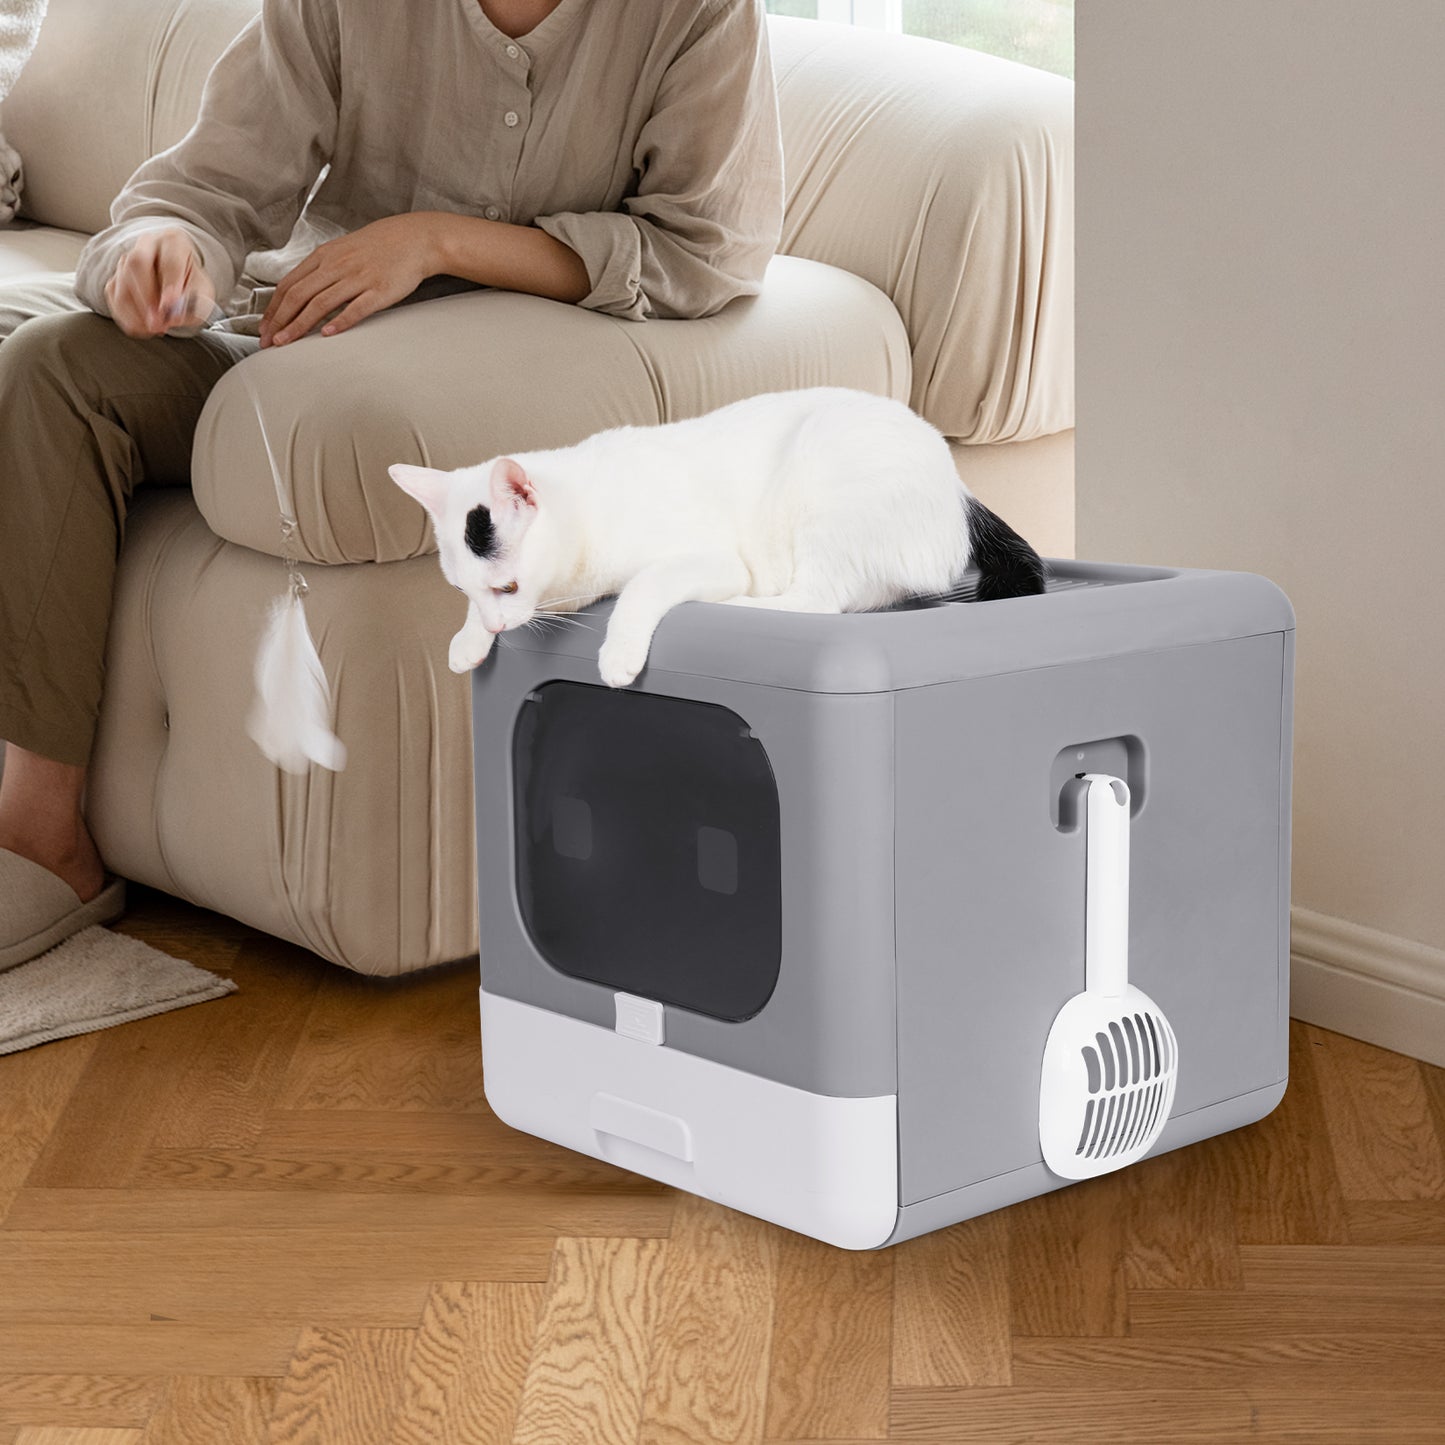 Bingopaw Extra Large Cat Litter Box Fully Enclosed Splash-Proof and Leak-Proof